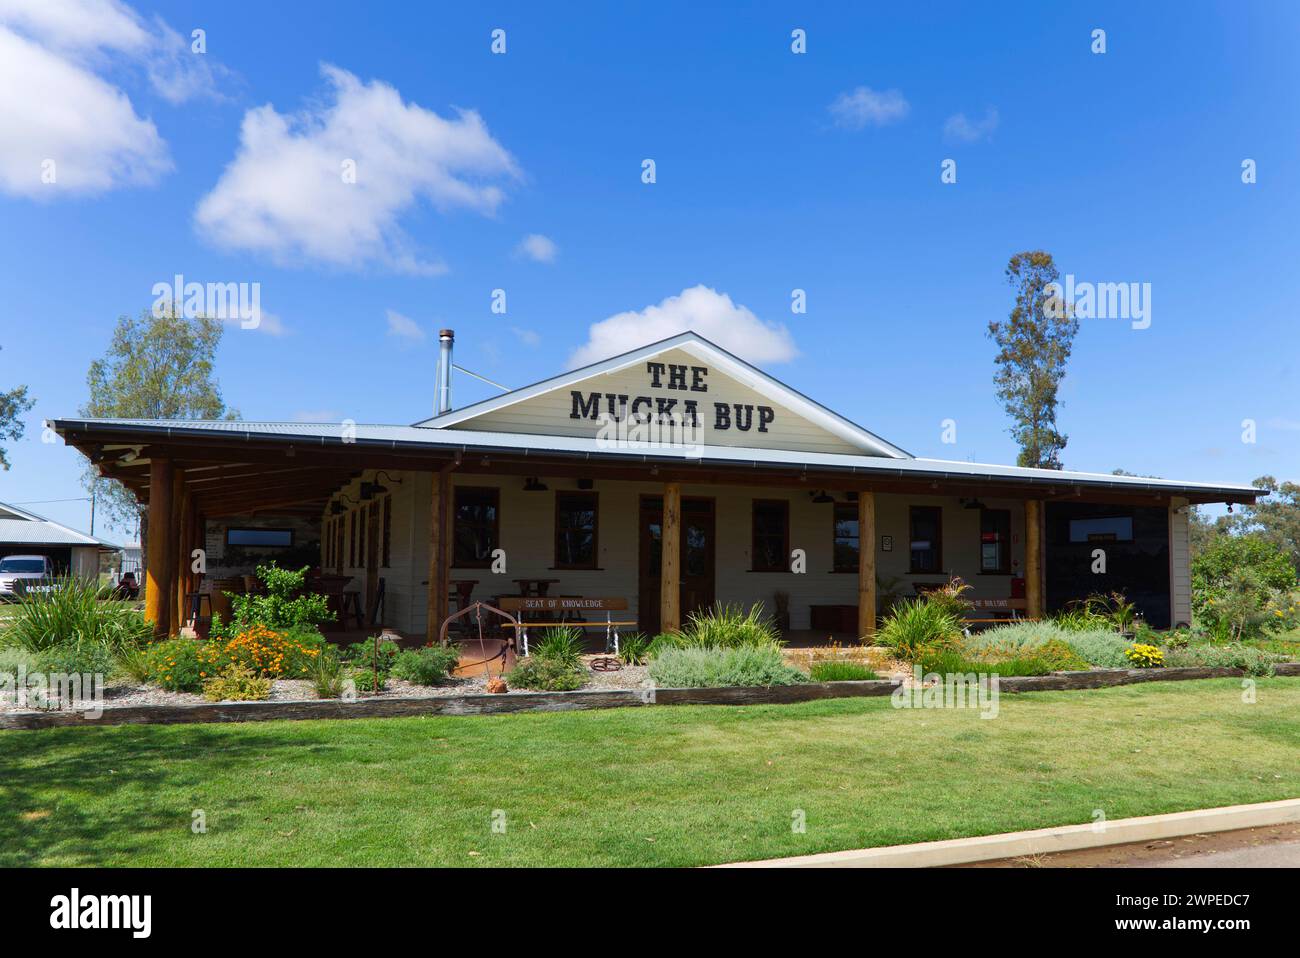 The Mucka Hotel found in the small village on the Warrego Highway Muckadilla Queensland Australia Stock Photo